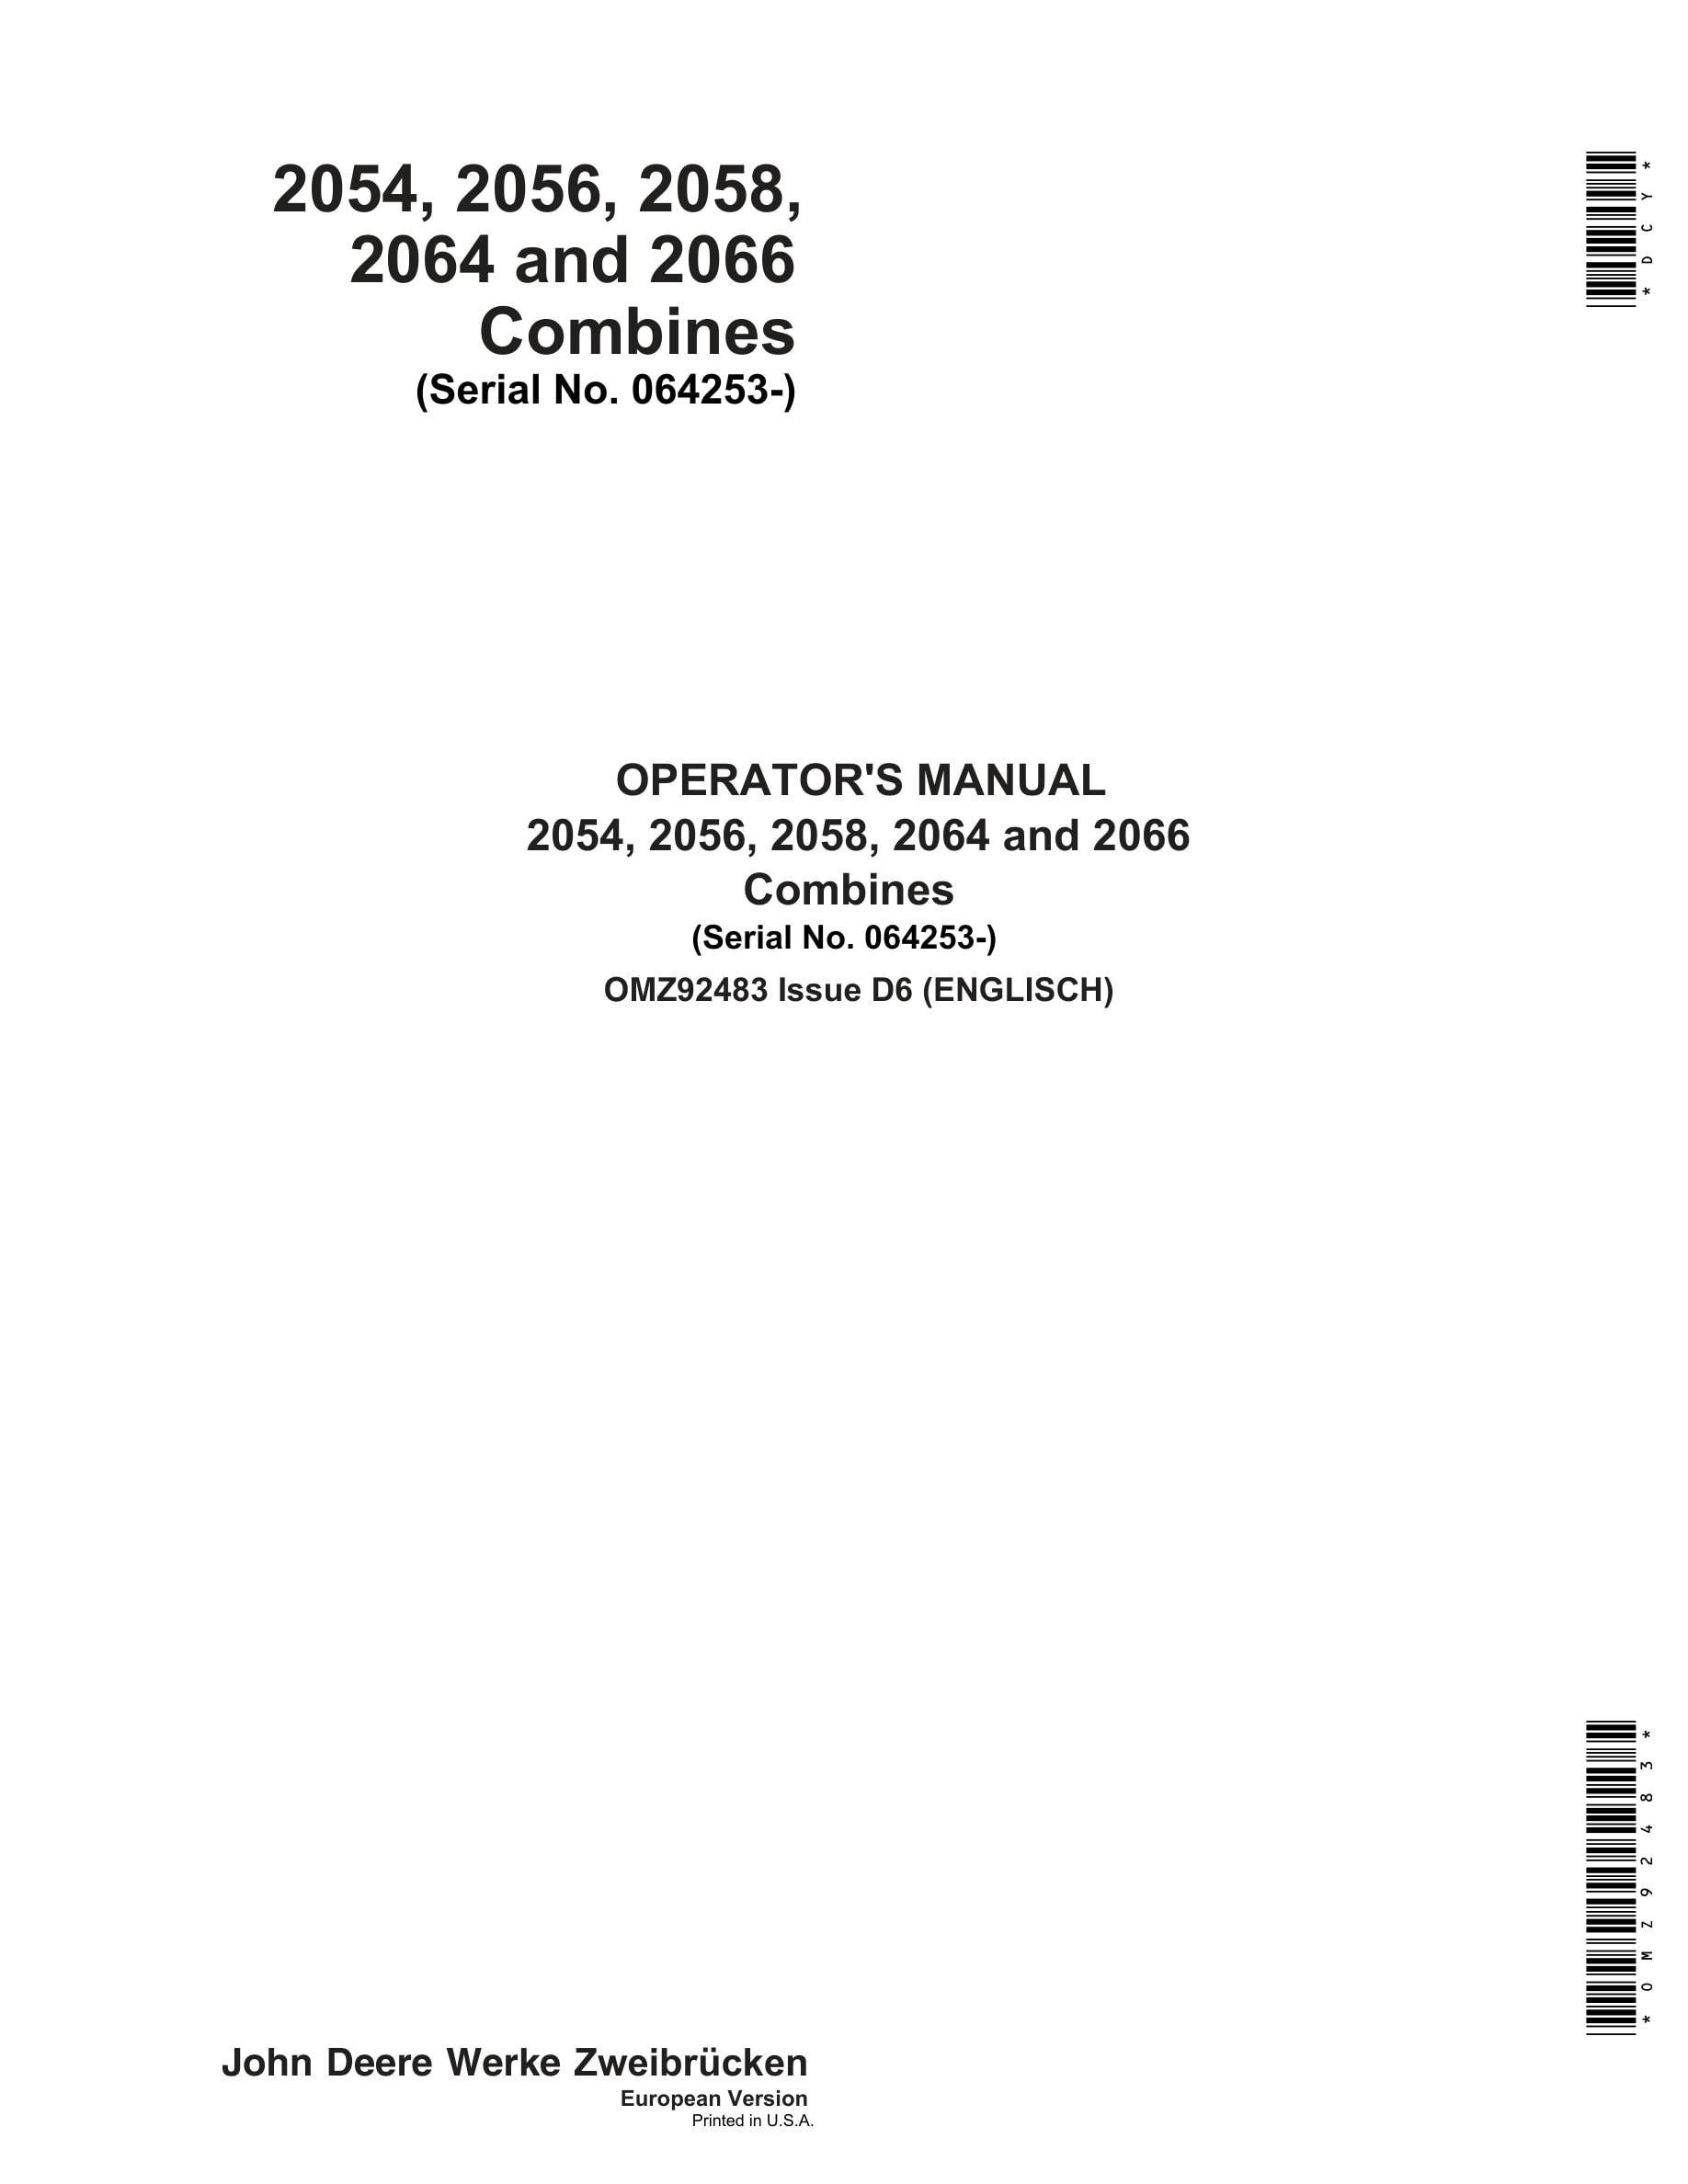 John Deere 2054, 2056, 2058, 2064 and 2066 Combine Operator Manual OMZ92483-1